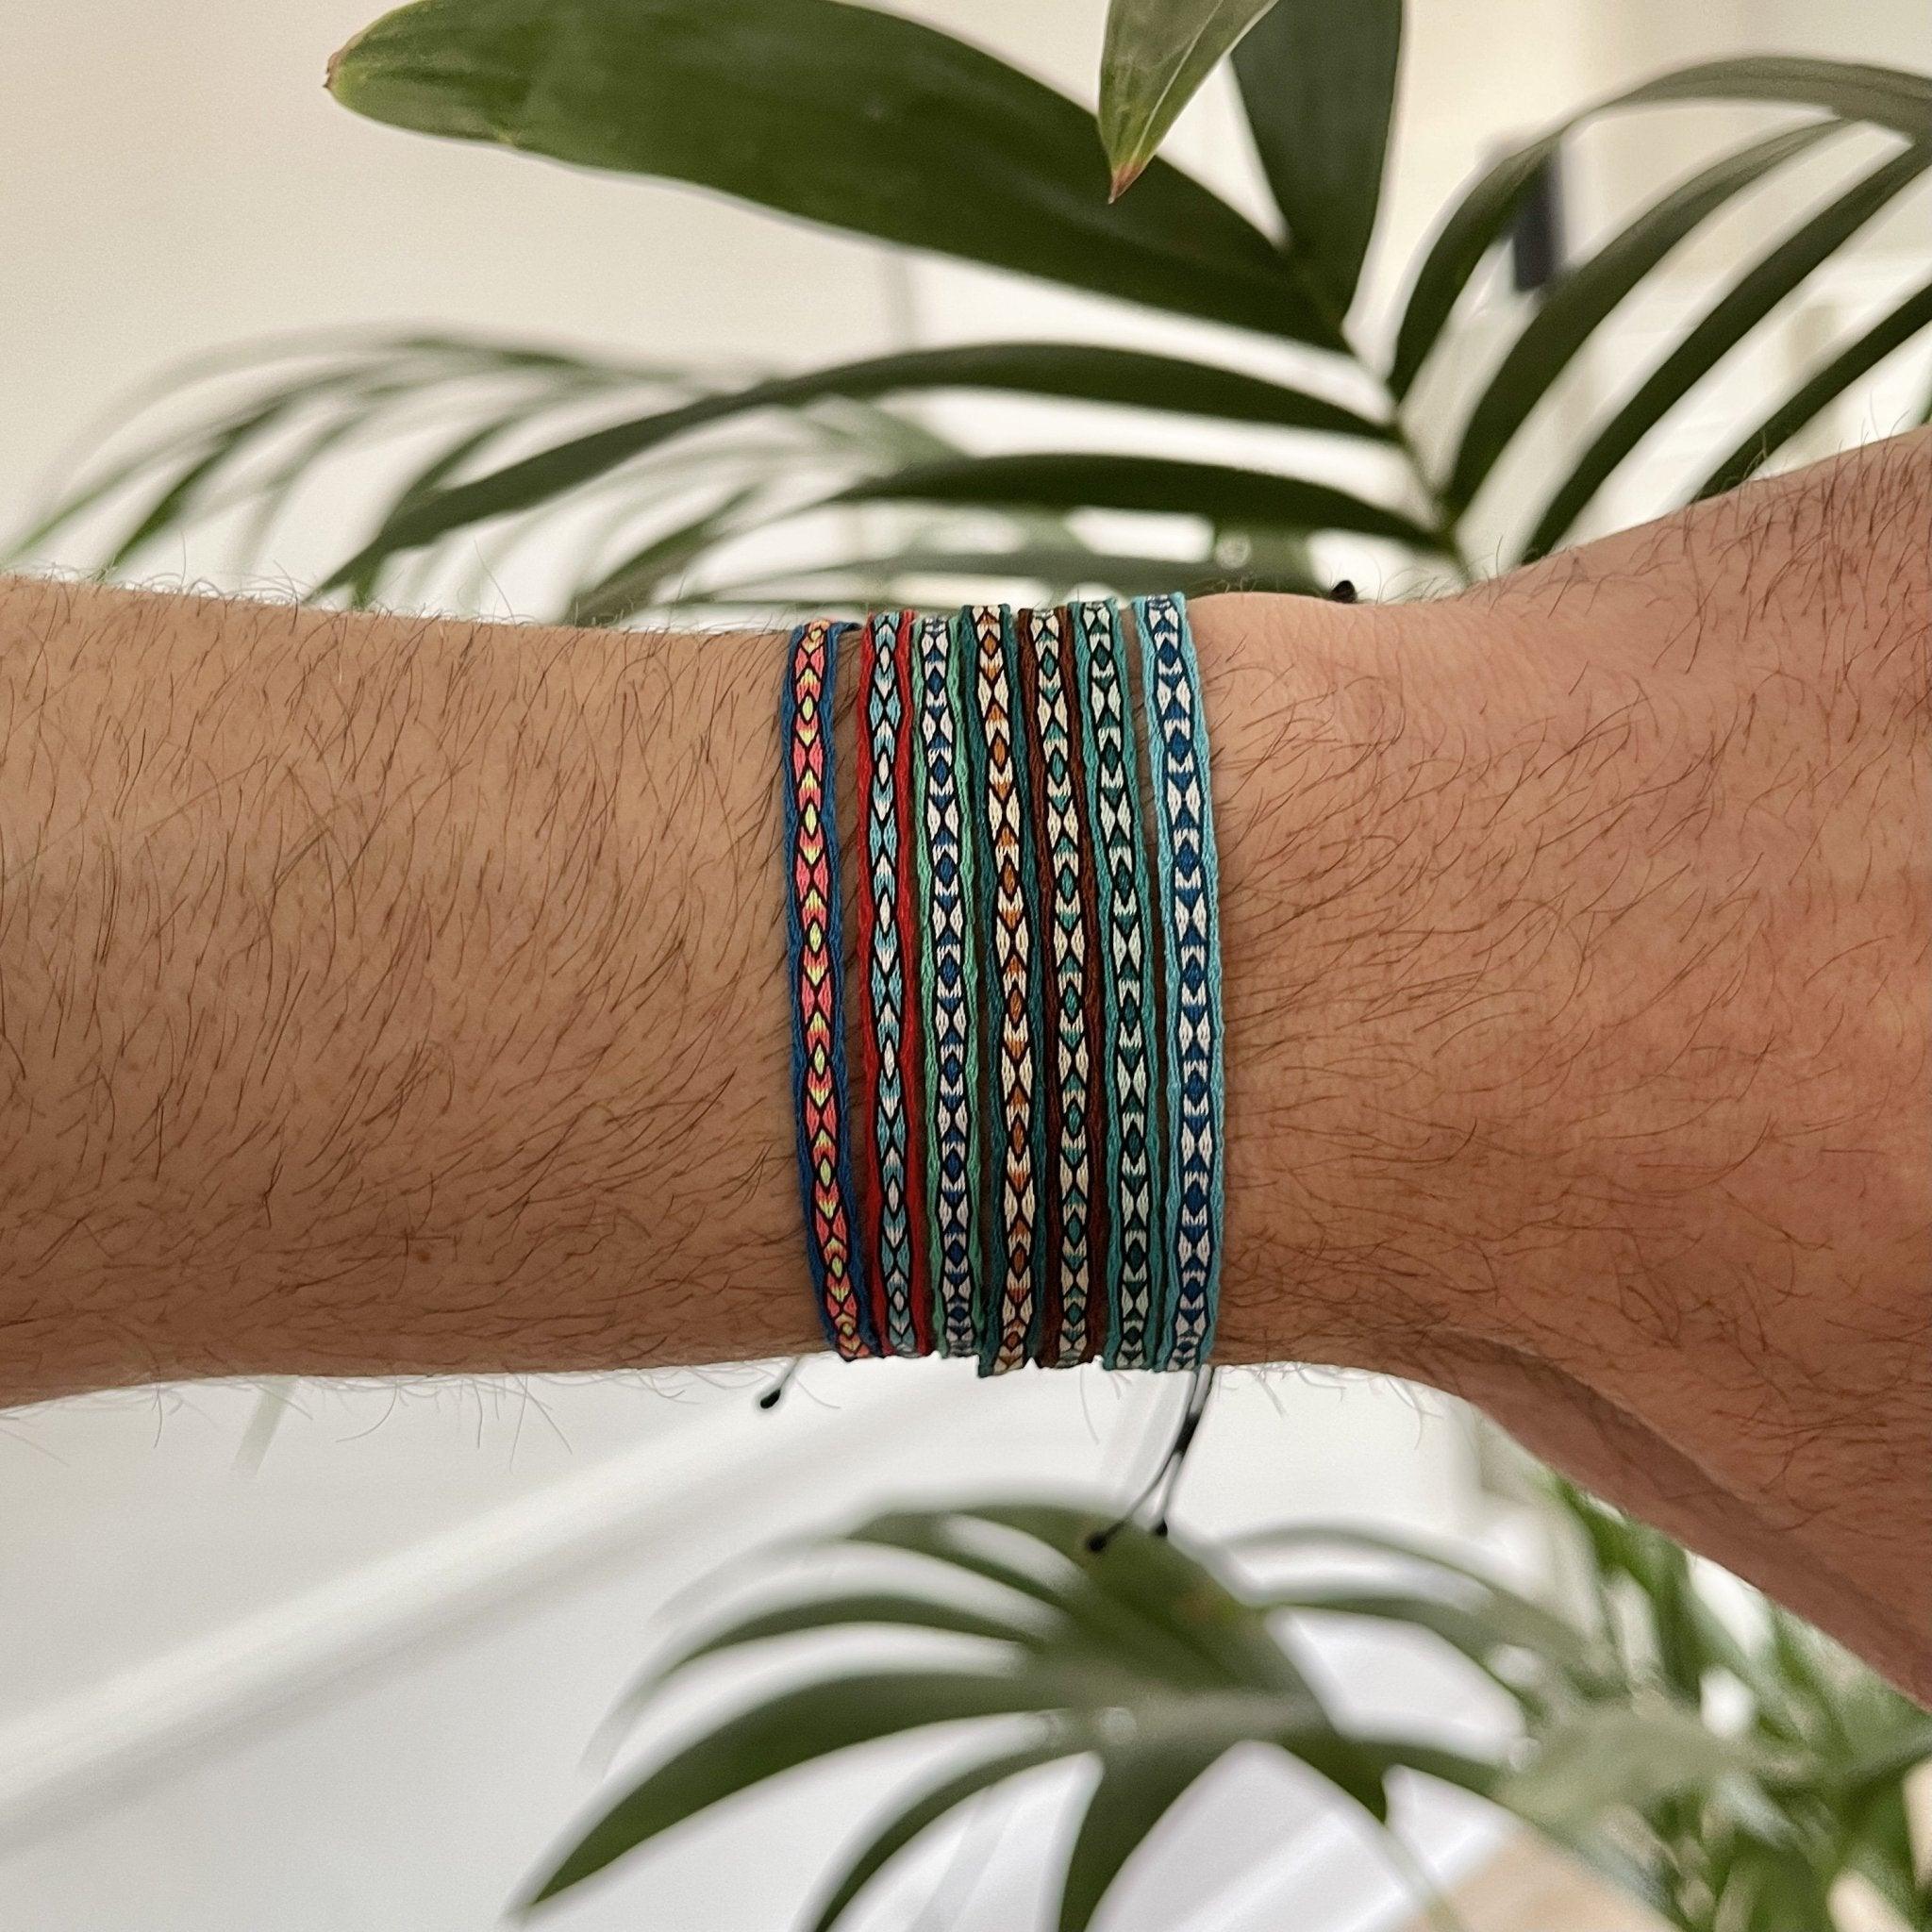 Bohemian Skinny Miyuki Beads Bracelet, Adjustable, Handmade Friendship